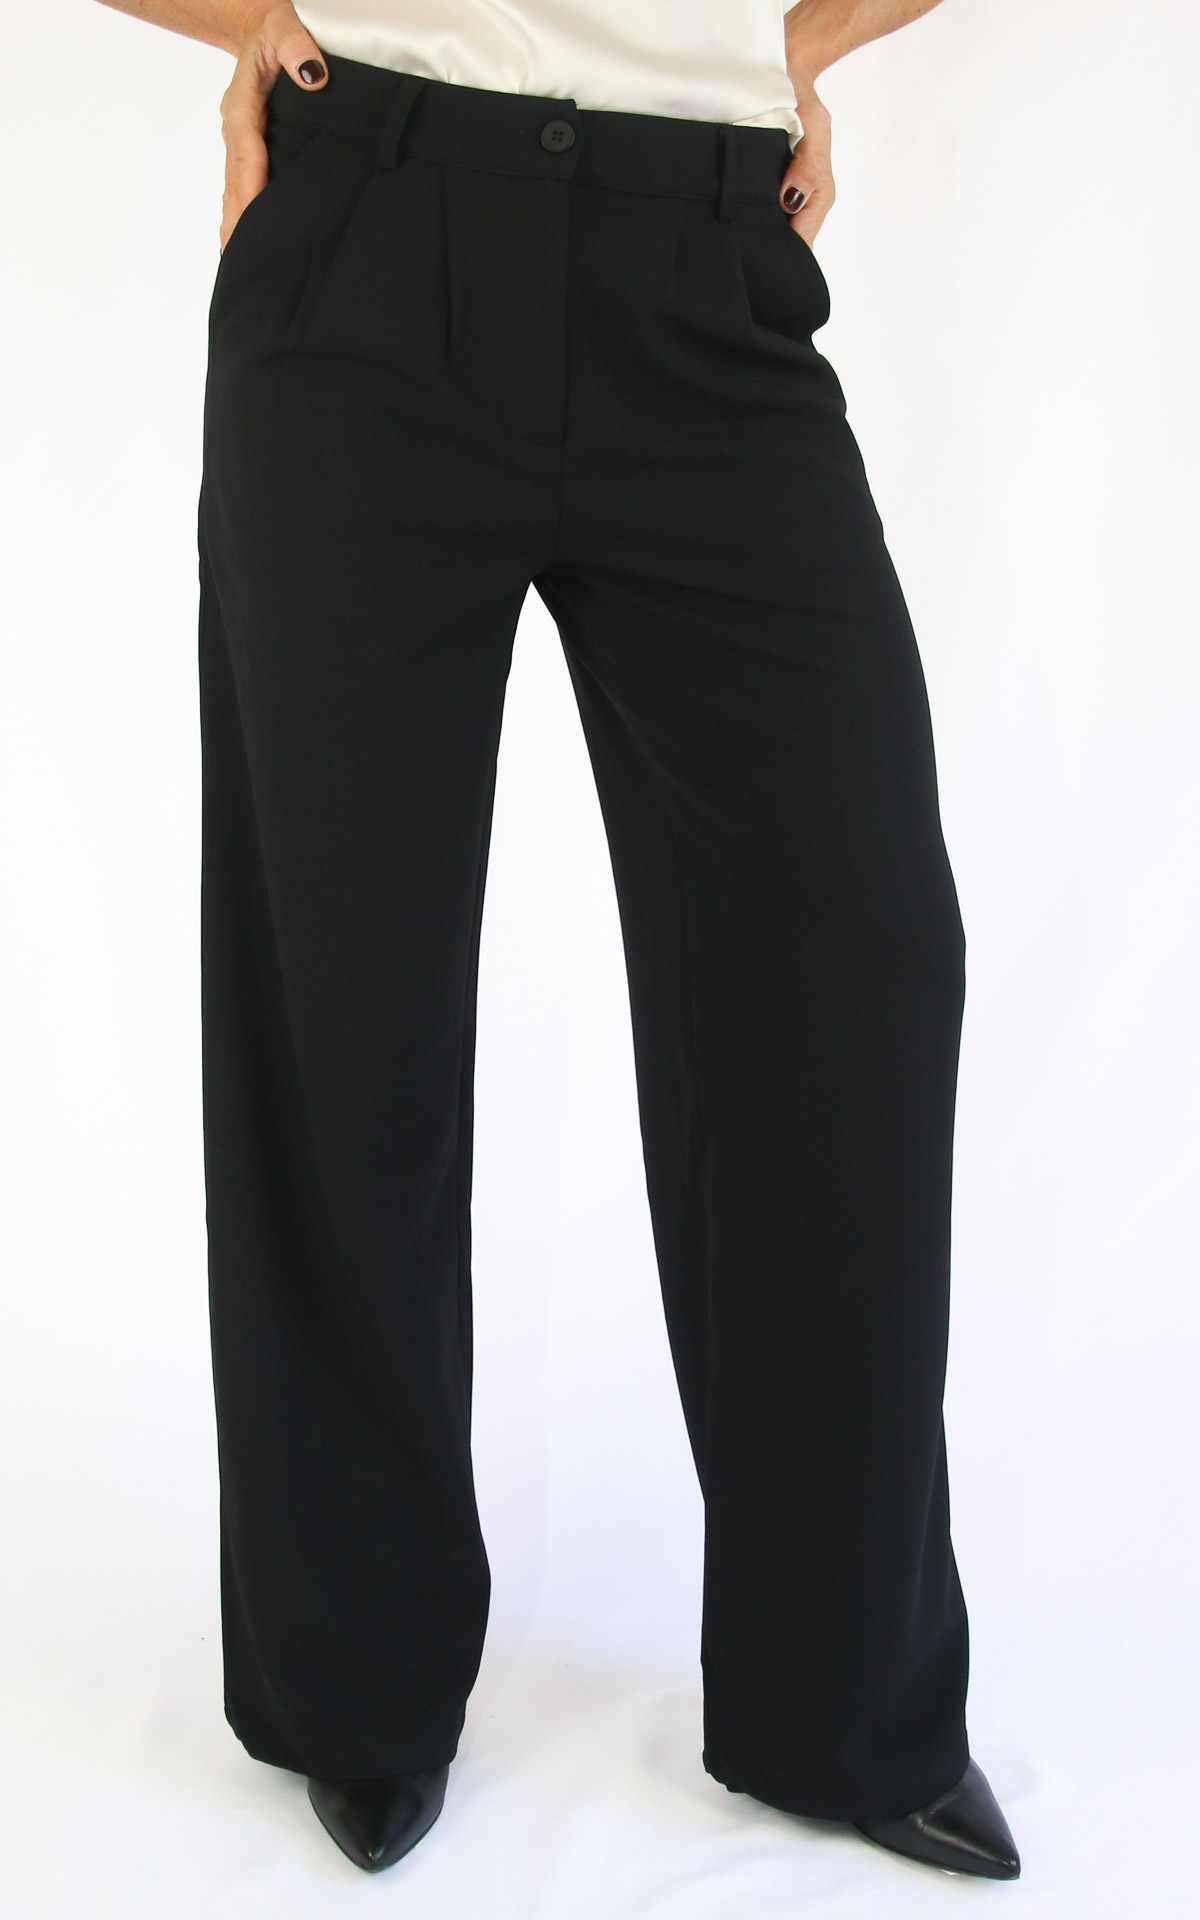 Compania Fantastica - pantaloni eleganti - nero